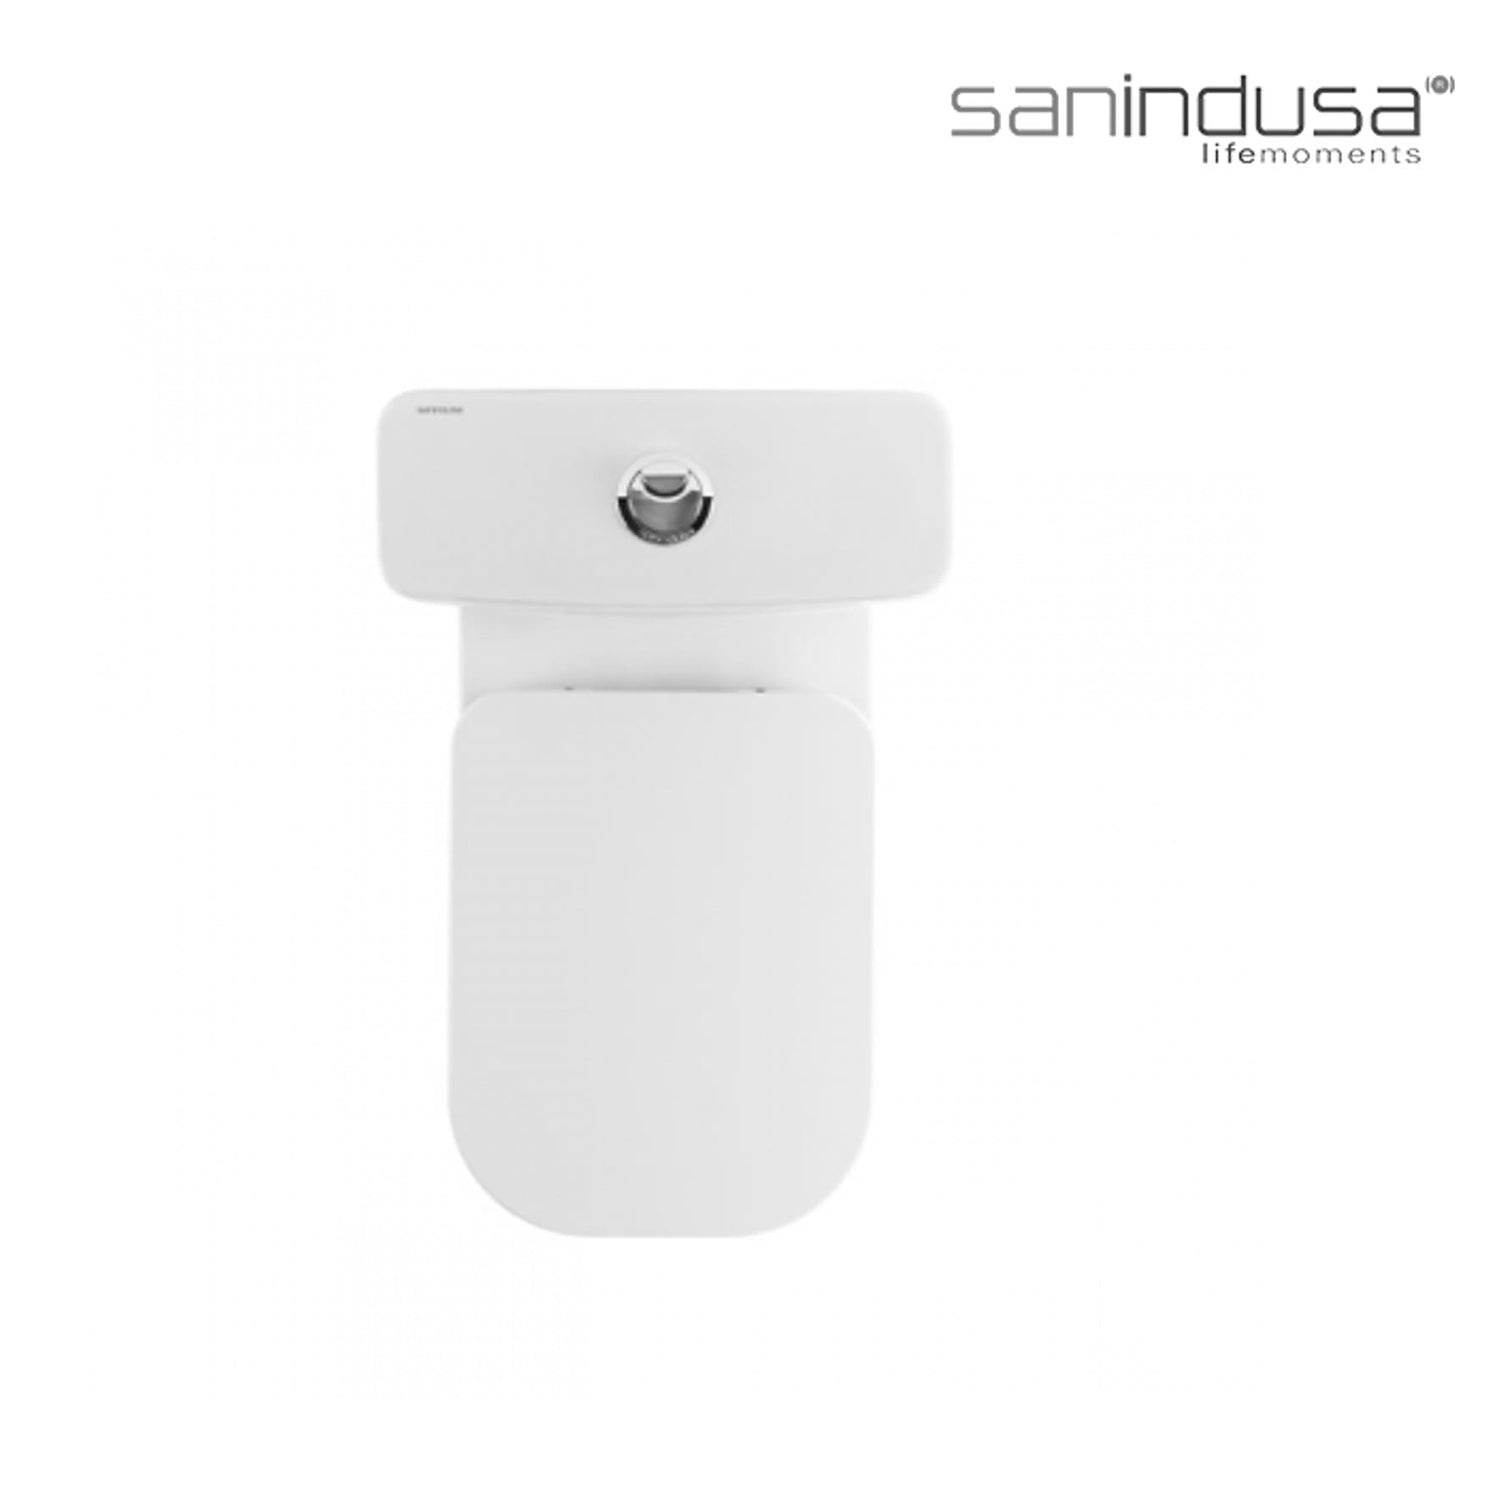 Sanita LOOK Compacta SANIDUSA - 134021